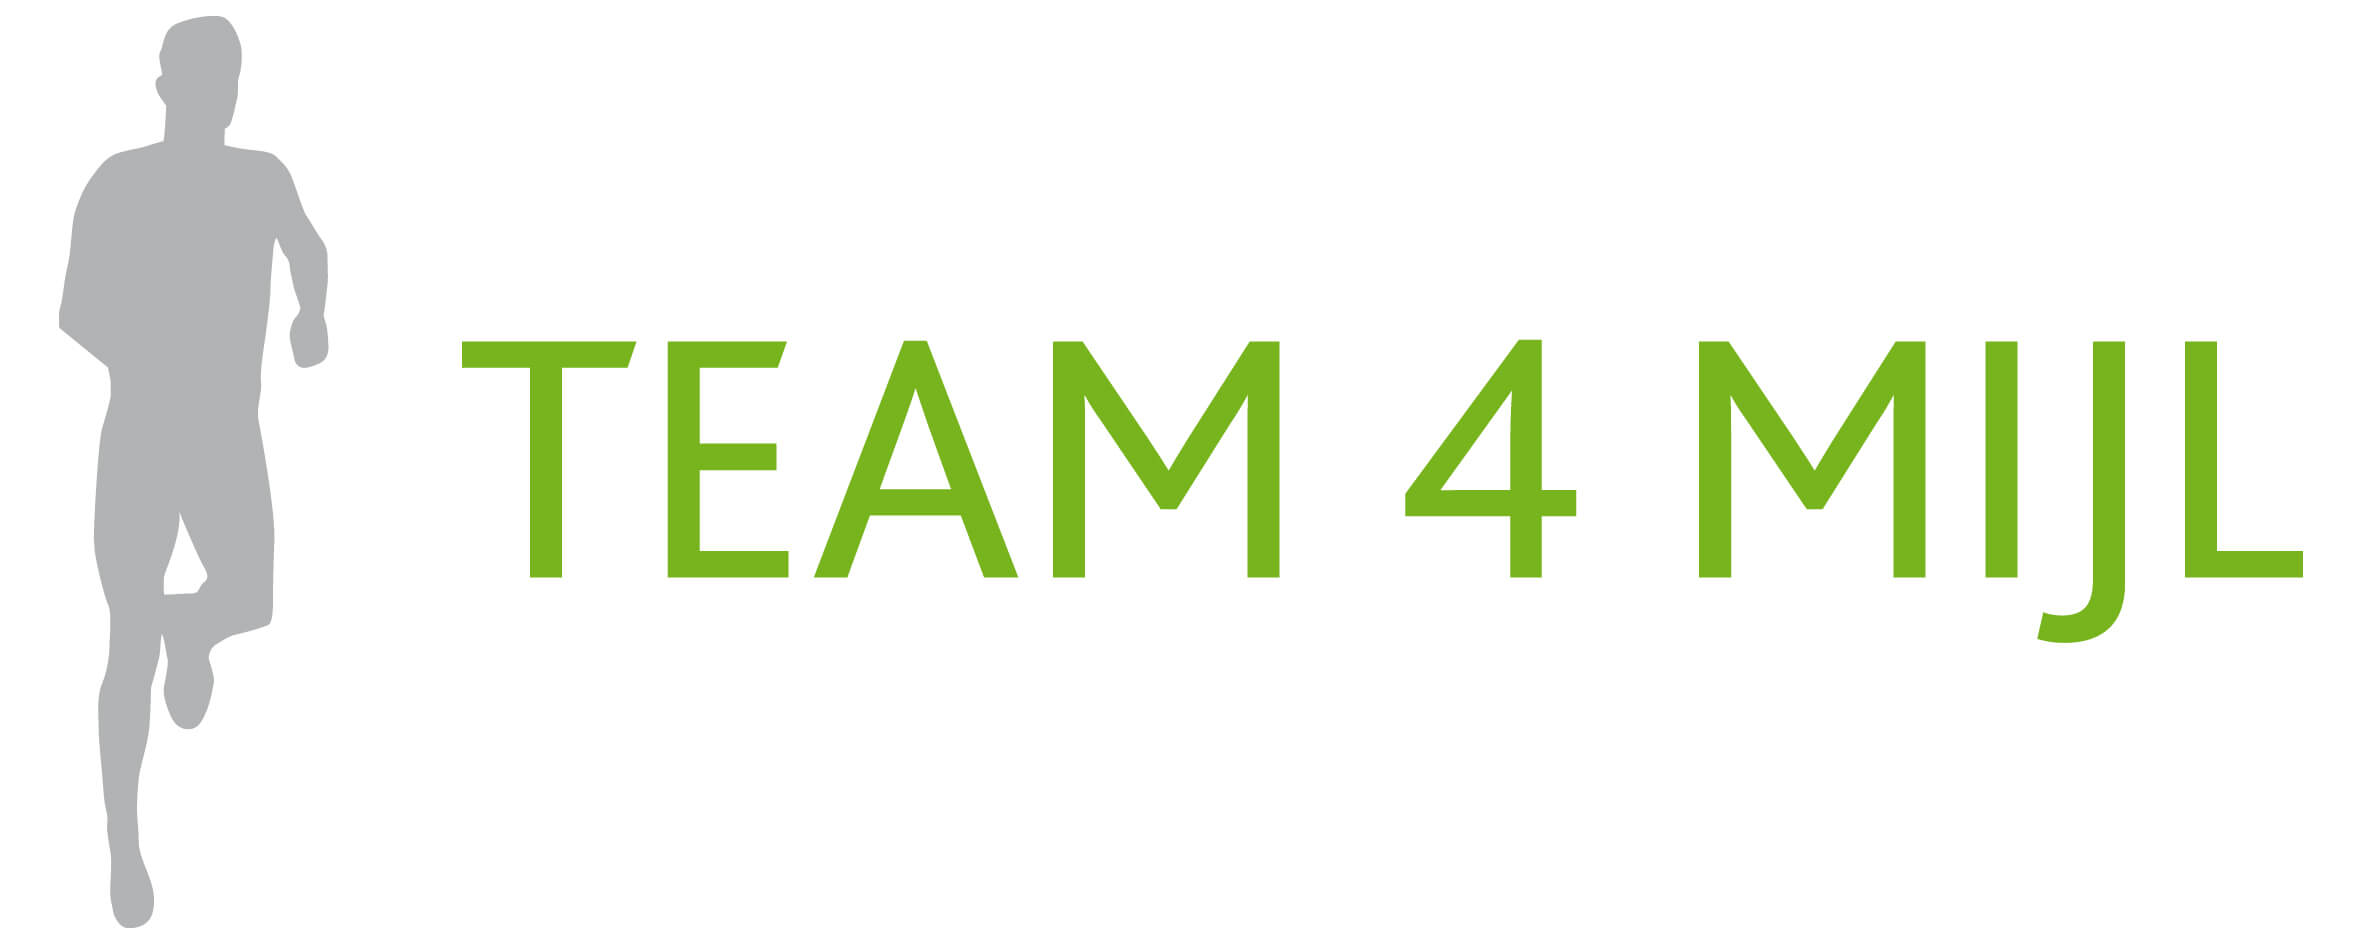 Team4mijl logo